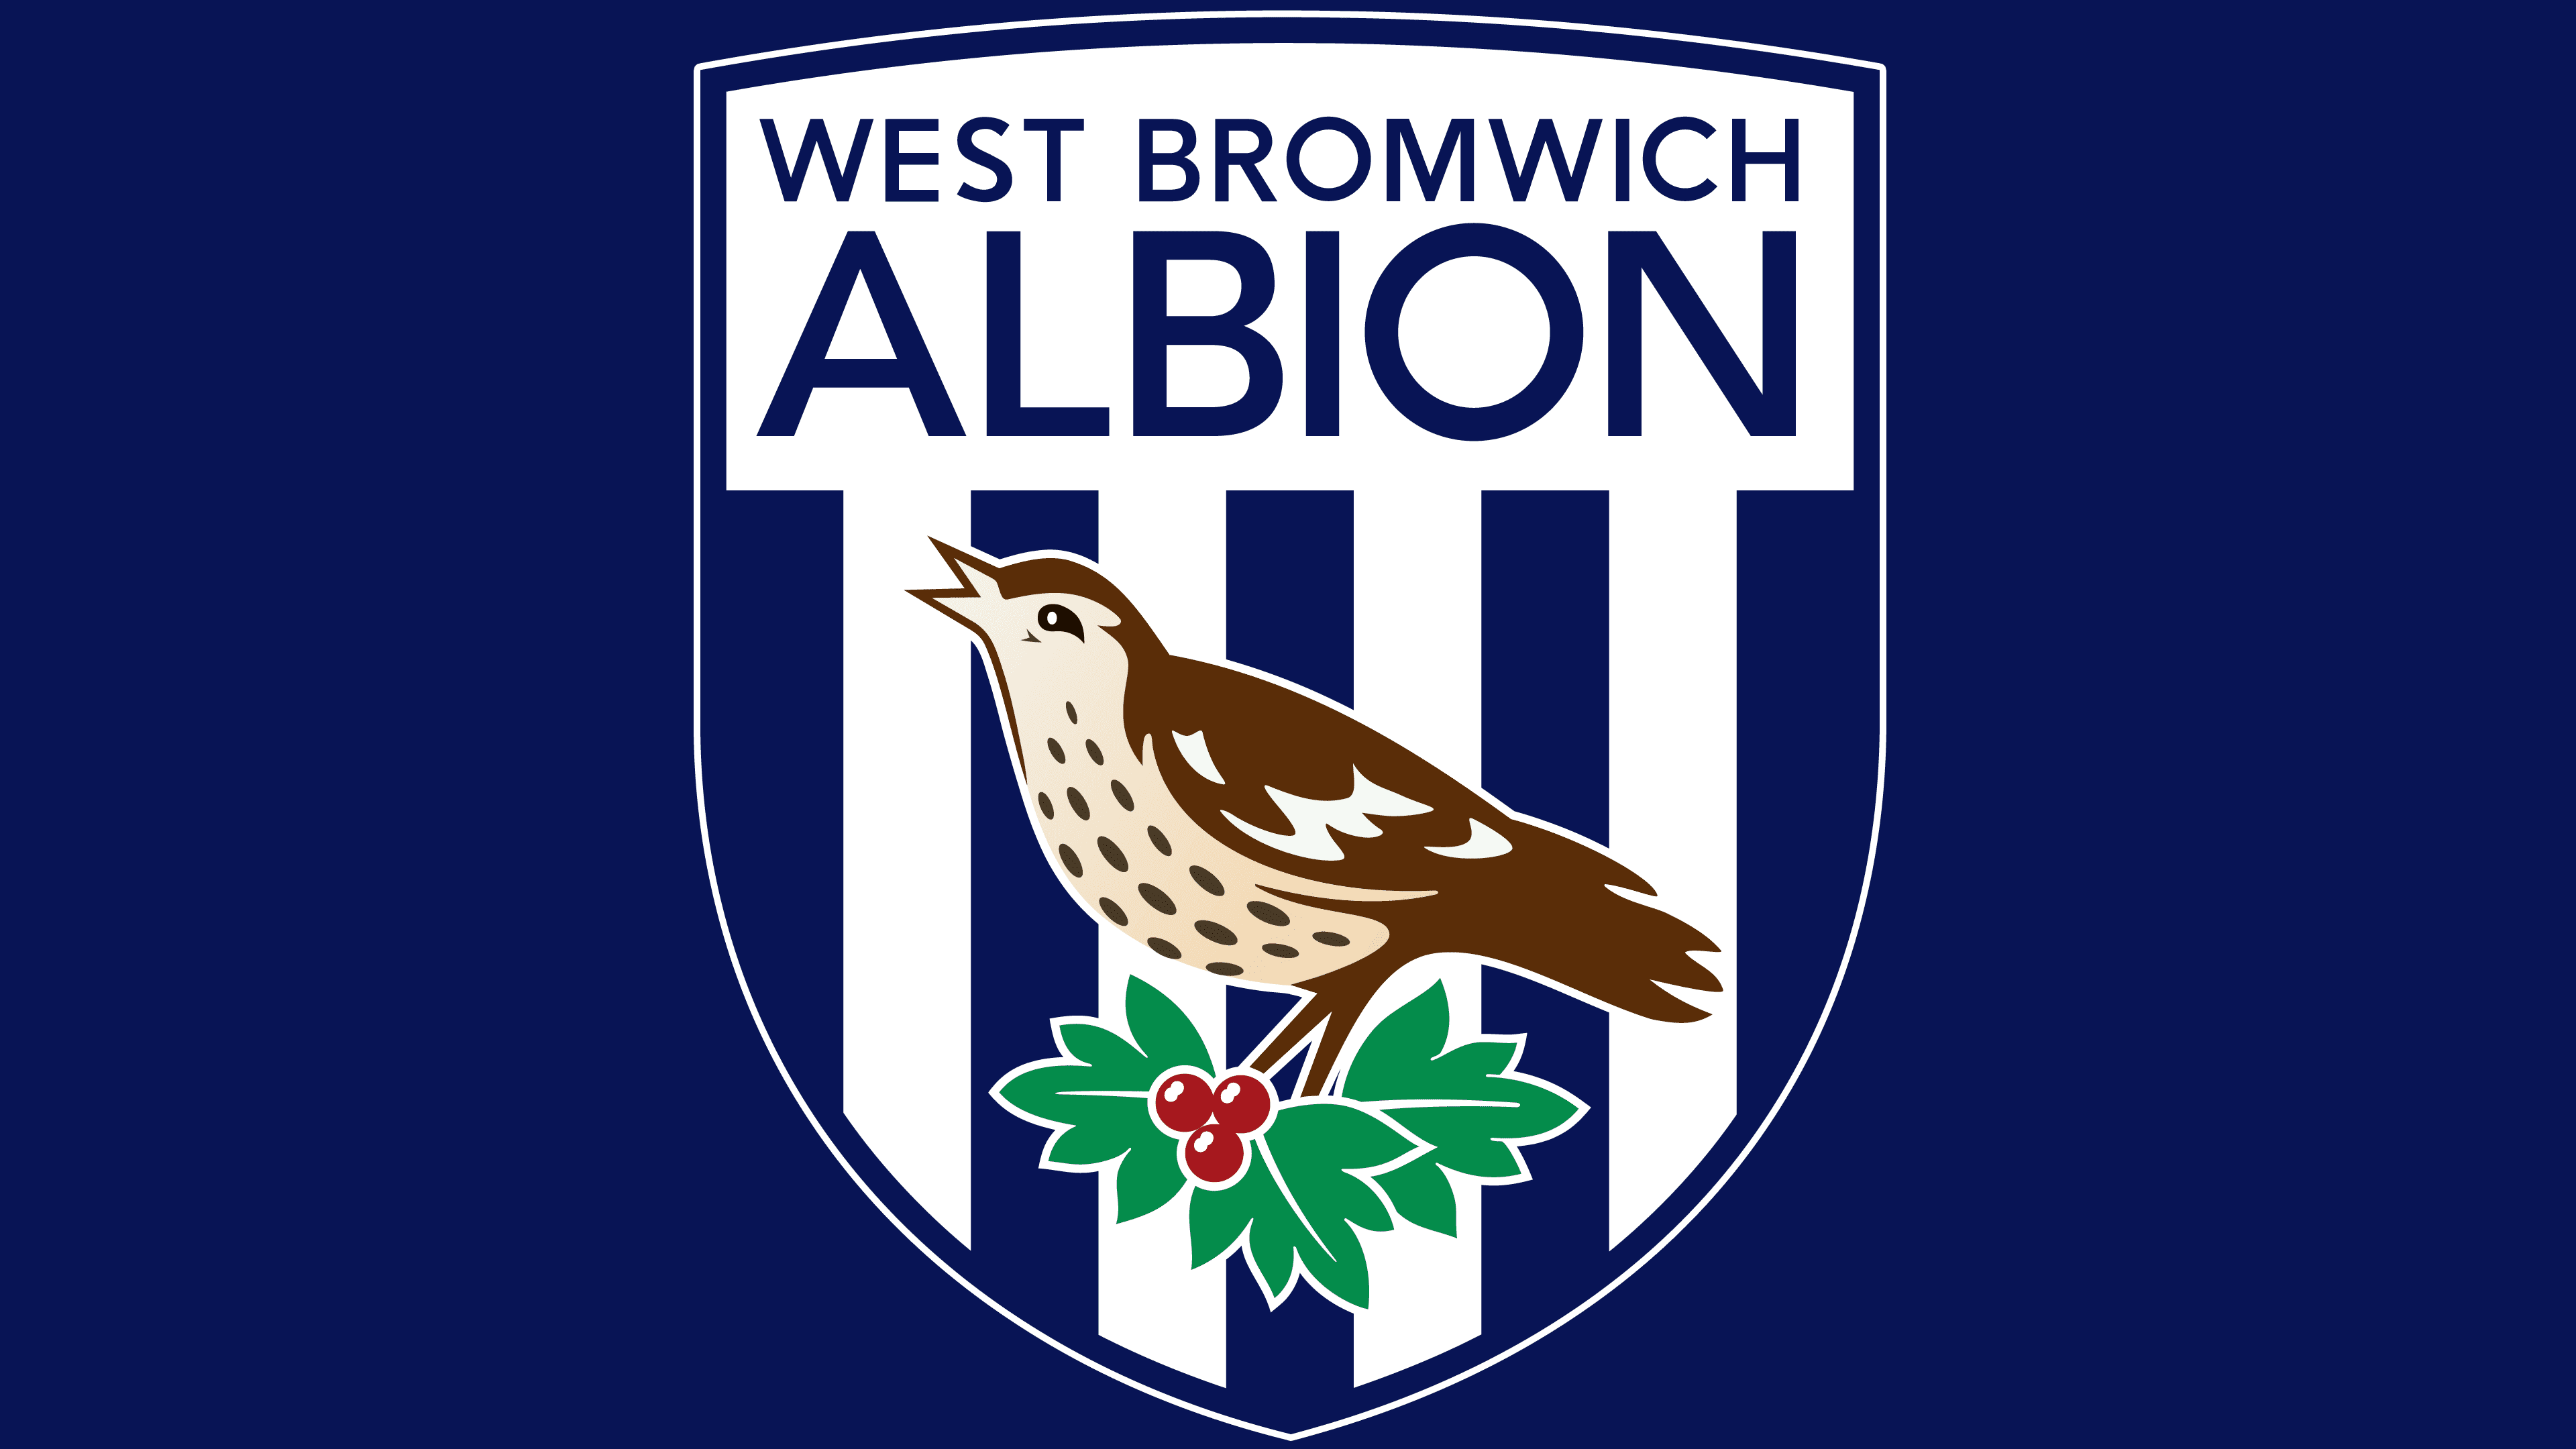 Football Club West Bromwich Albion Emblem the throstle an